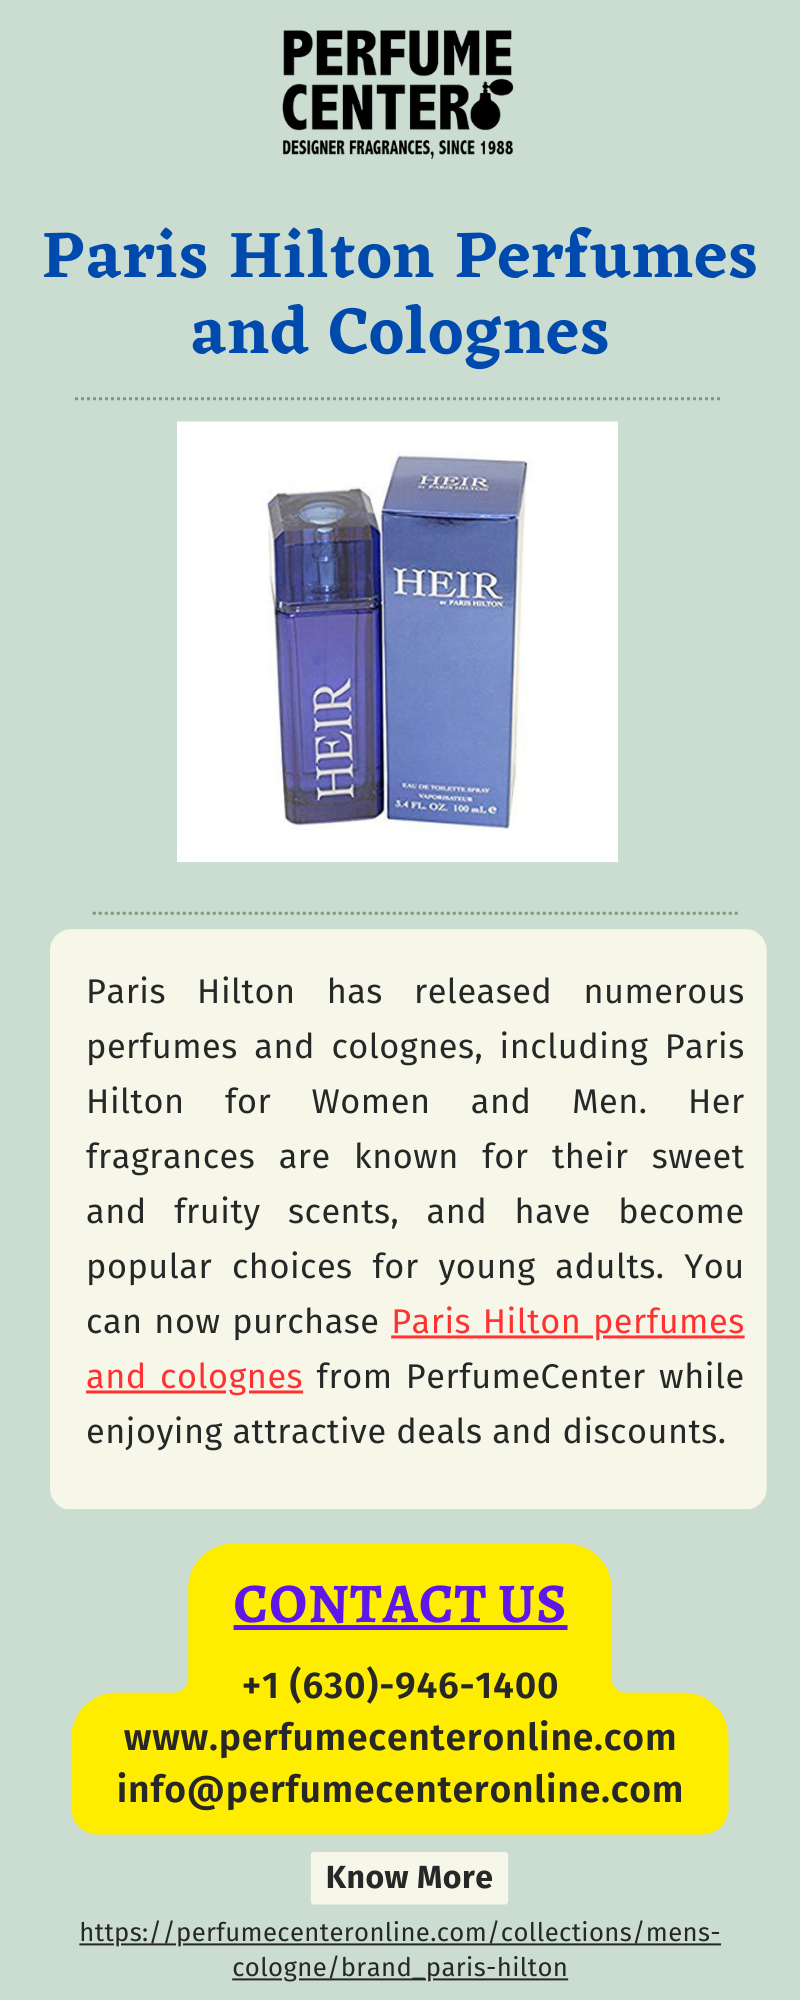 Paris Hilton Perfumes and Colognes
